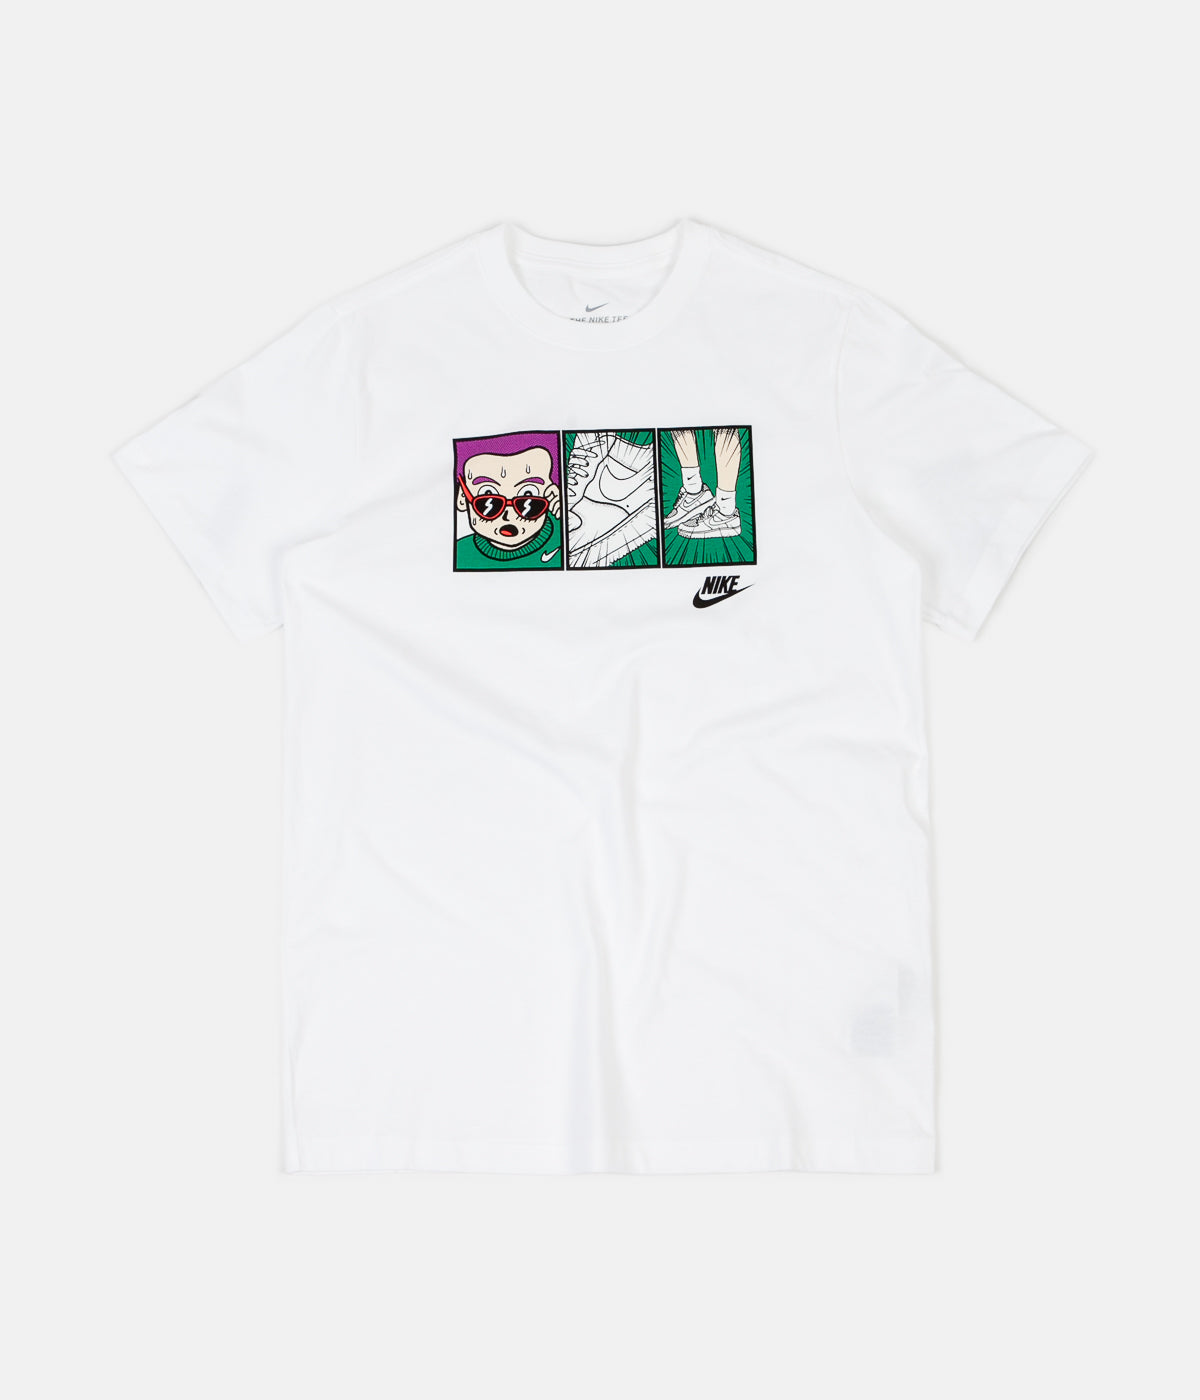 Nike Illustration T-Shirt - White 